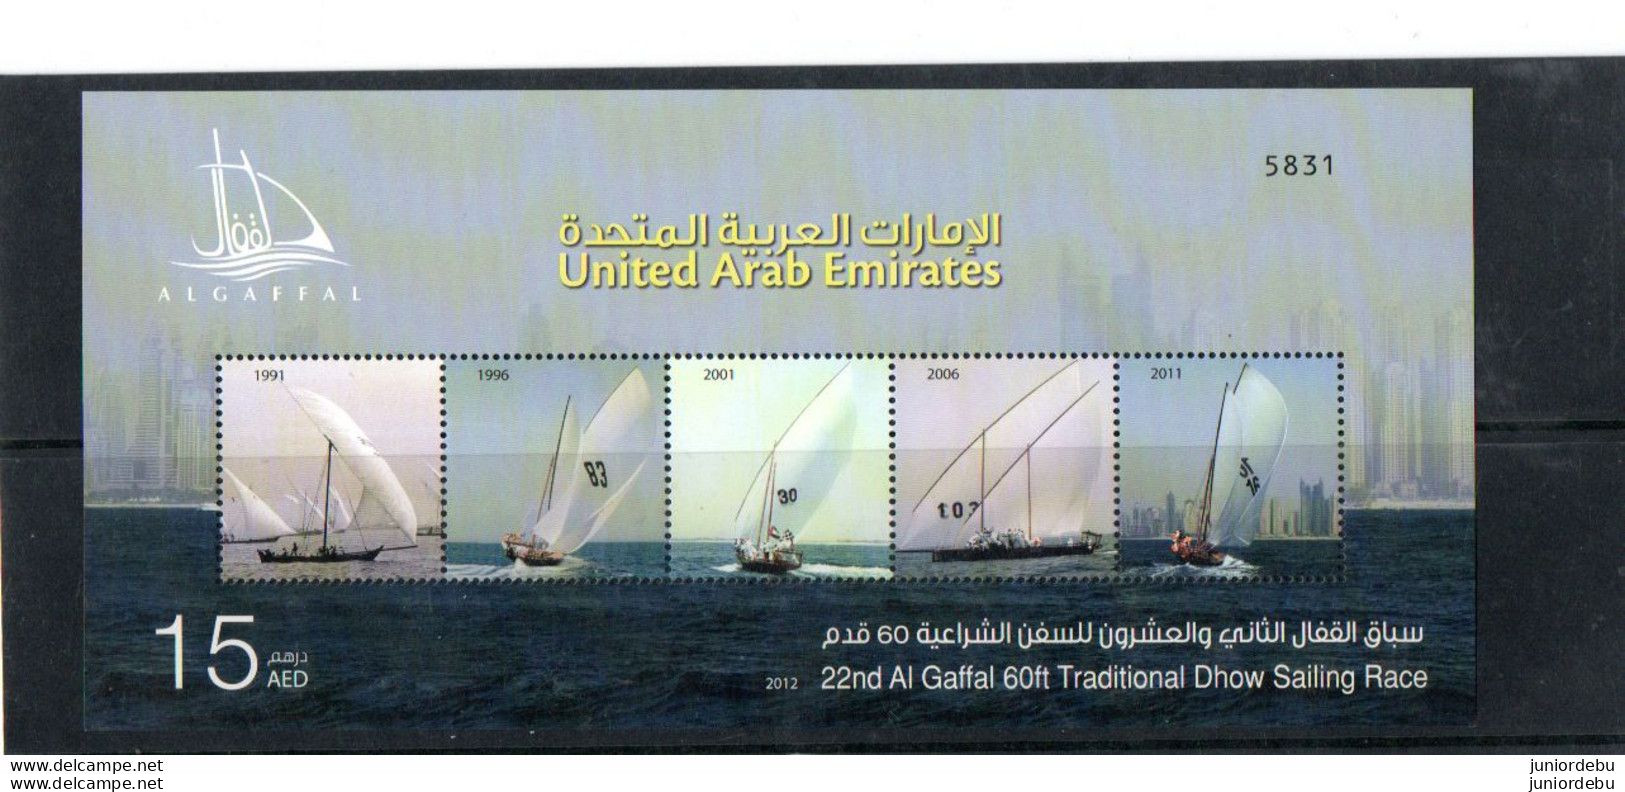 UAE - 2012 - The 22nd Al Gaffal Dhow Sailing Race - Miniature Sheet - MNH. ( OL 11/12/2022) - Ver. Arab. Emirate